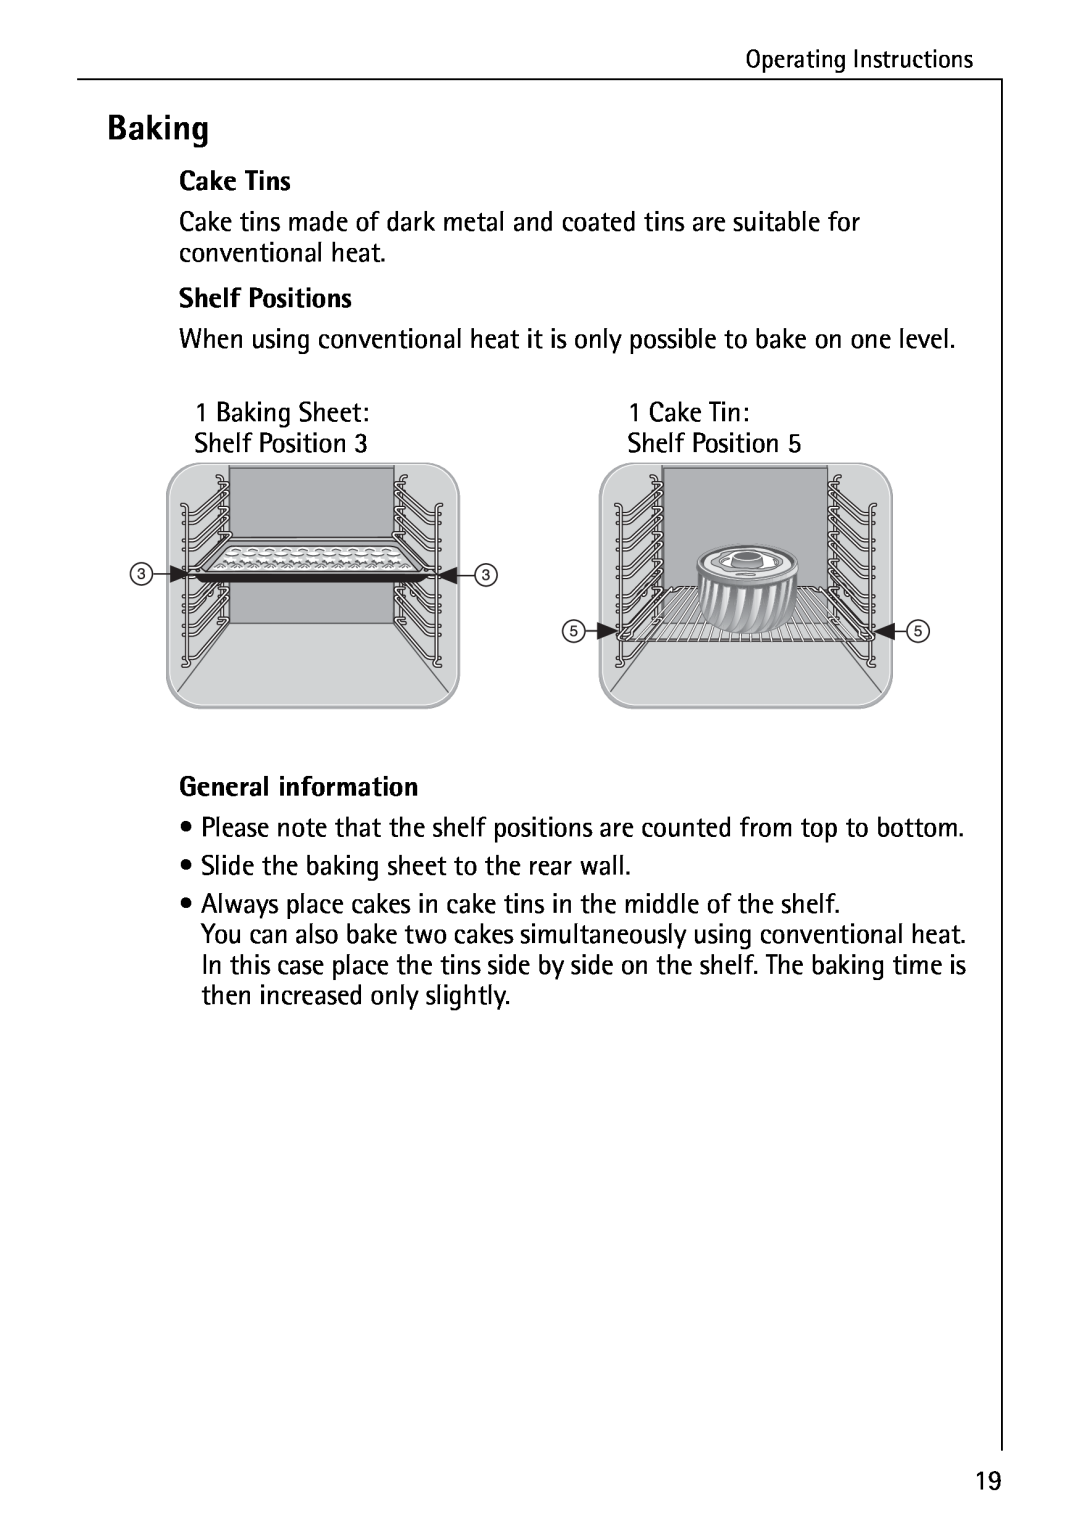 AEG 2003 F operating instructions Baking, Cake Tins, General information, Shelf Positions 